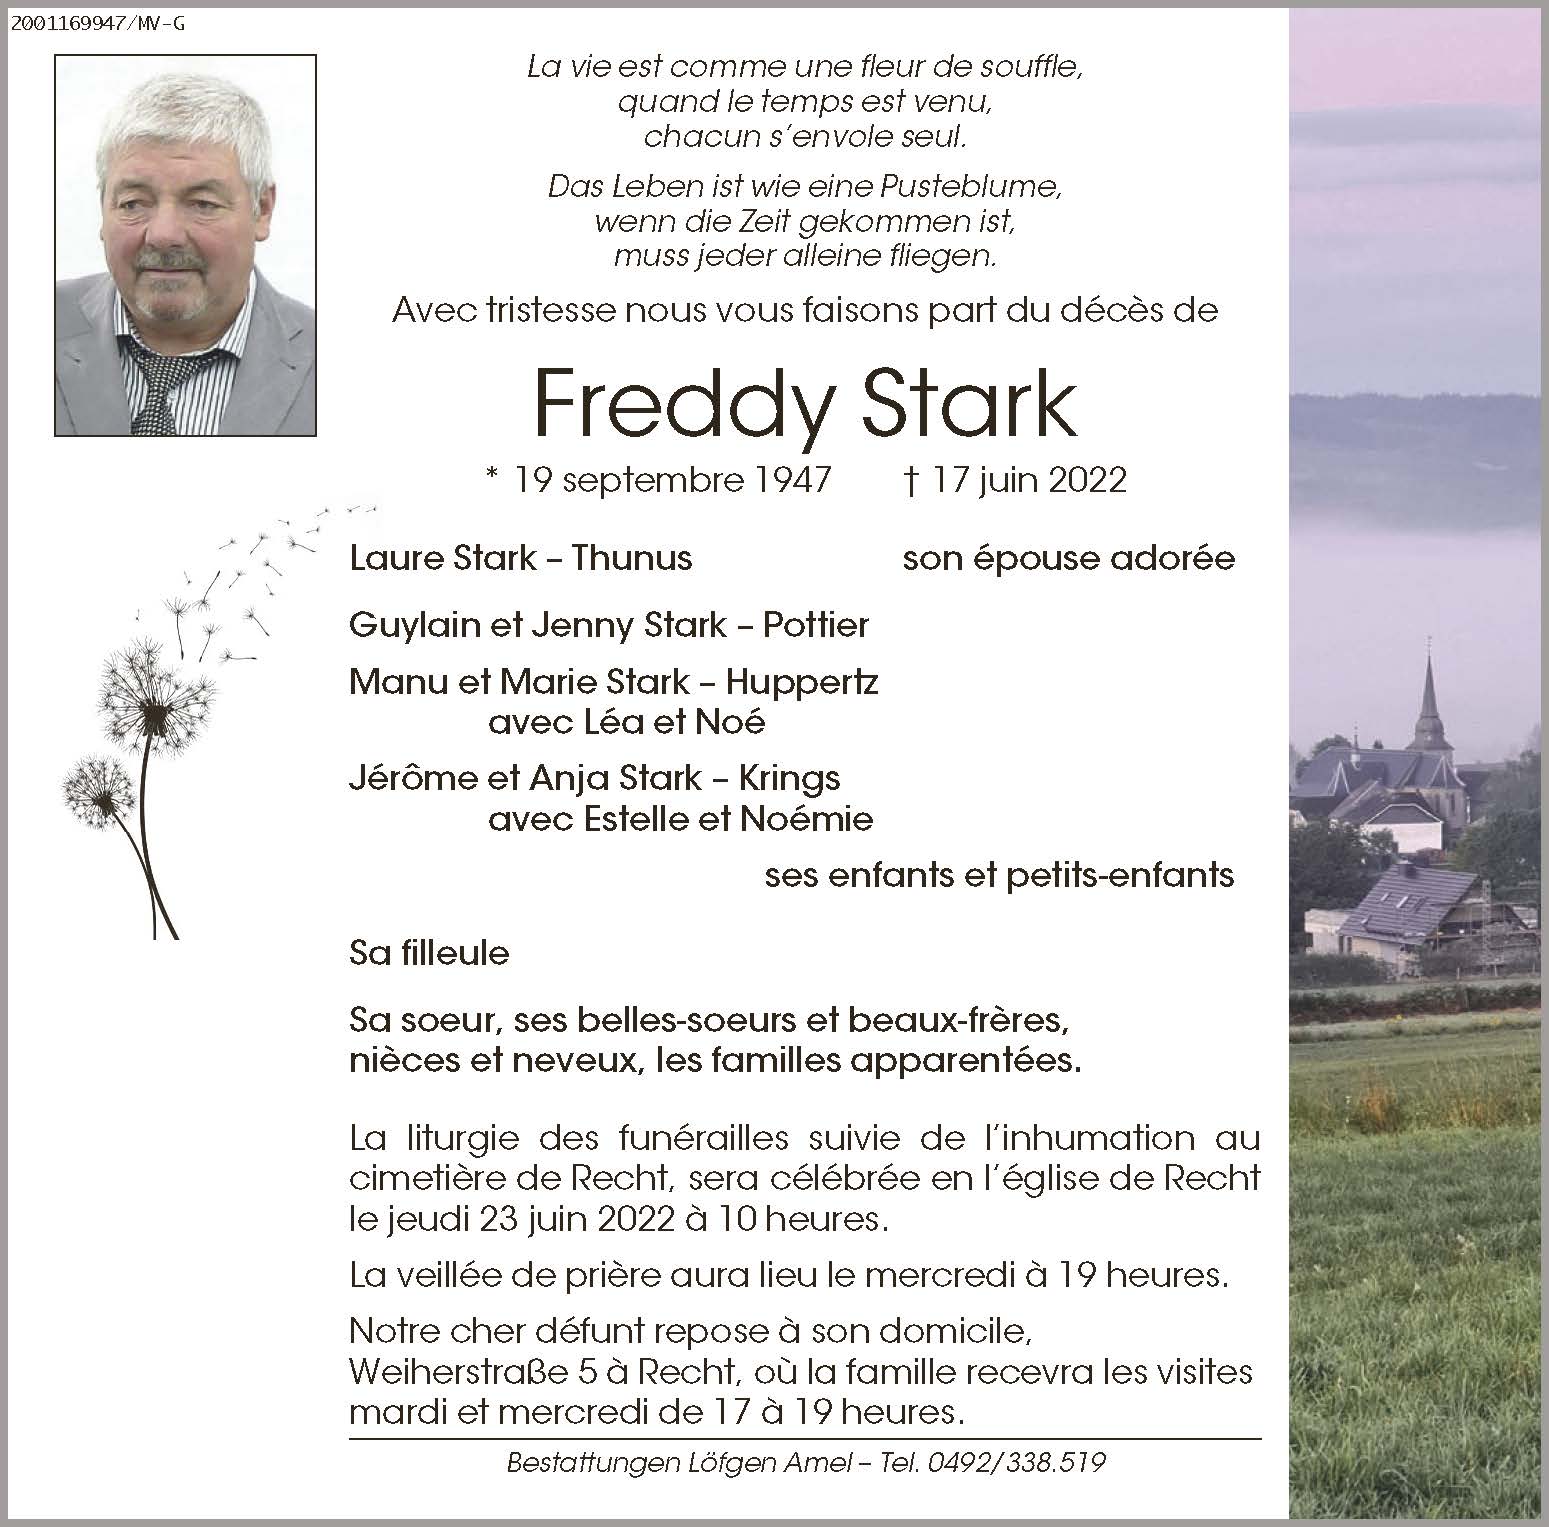 Freddy Stark